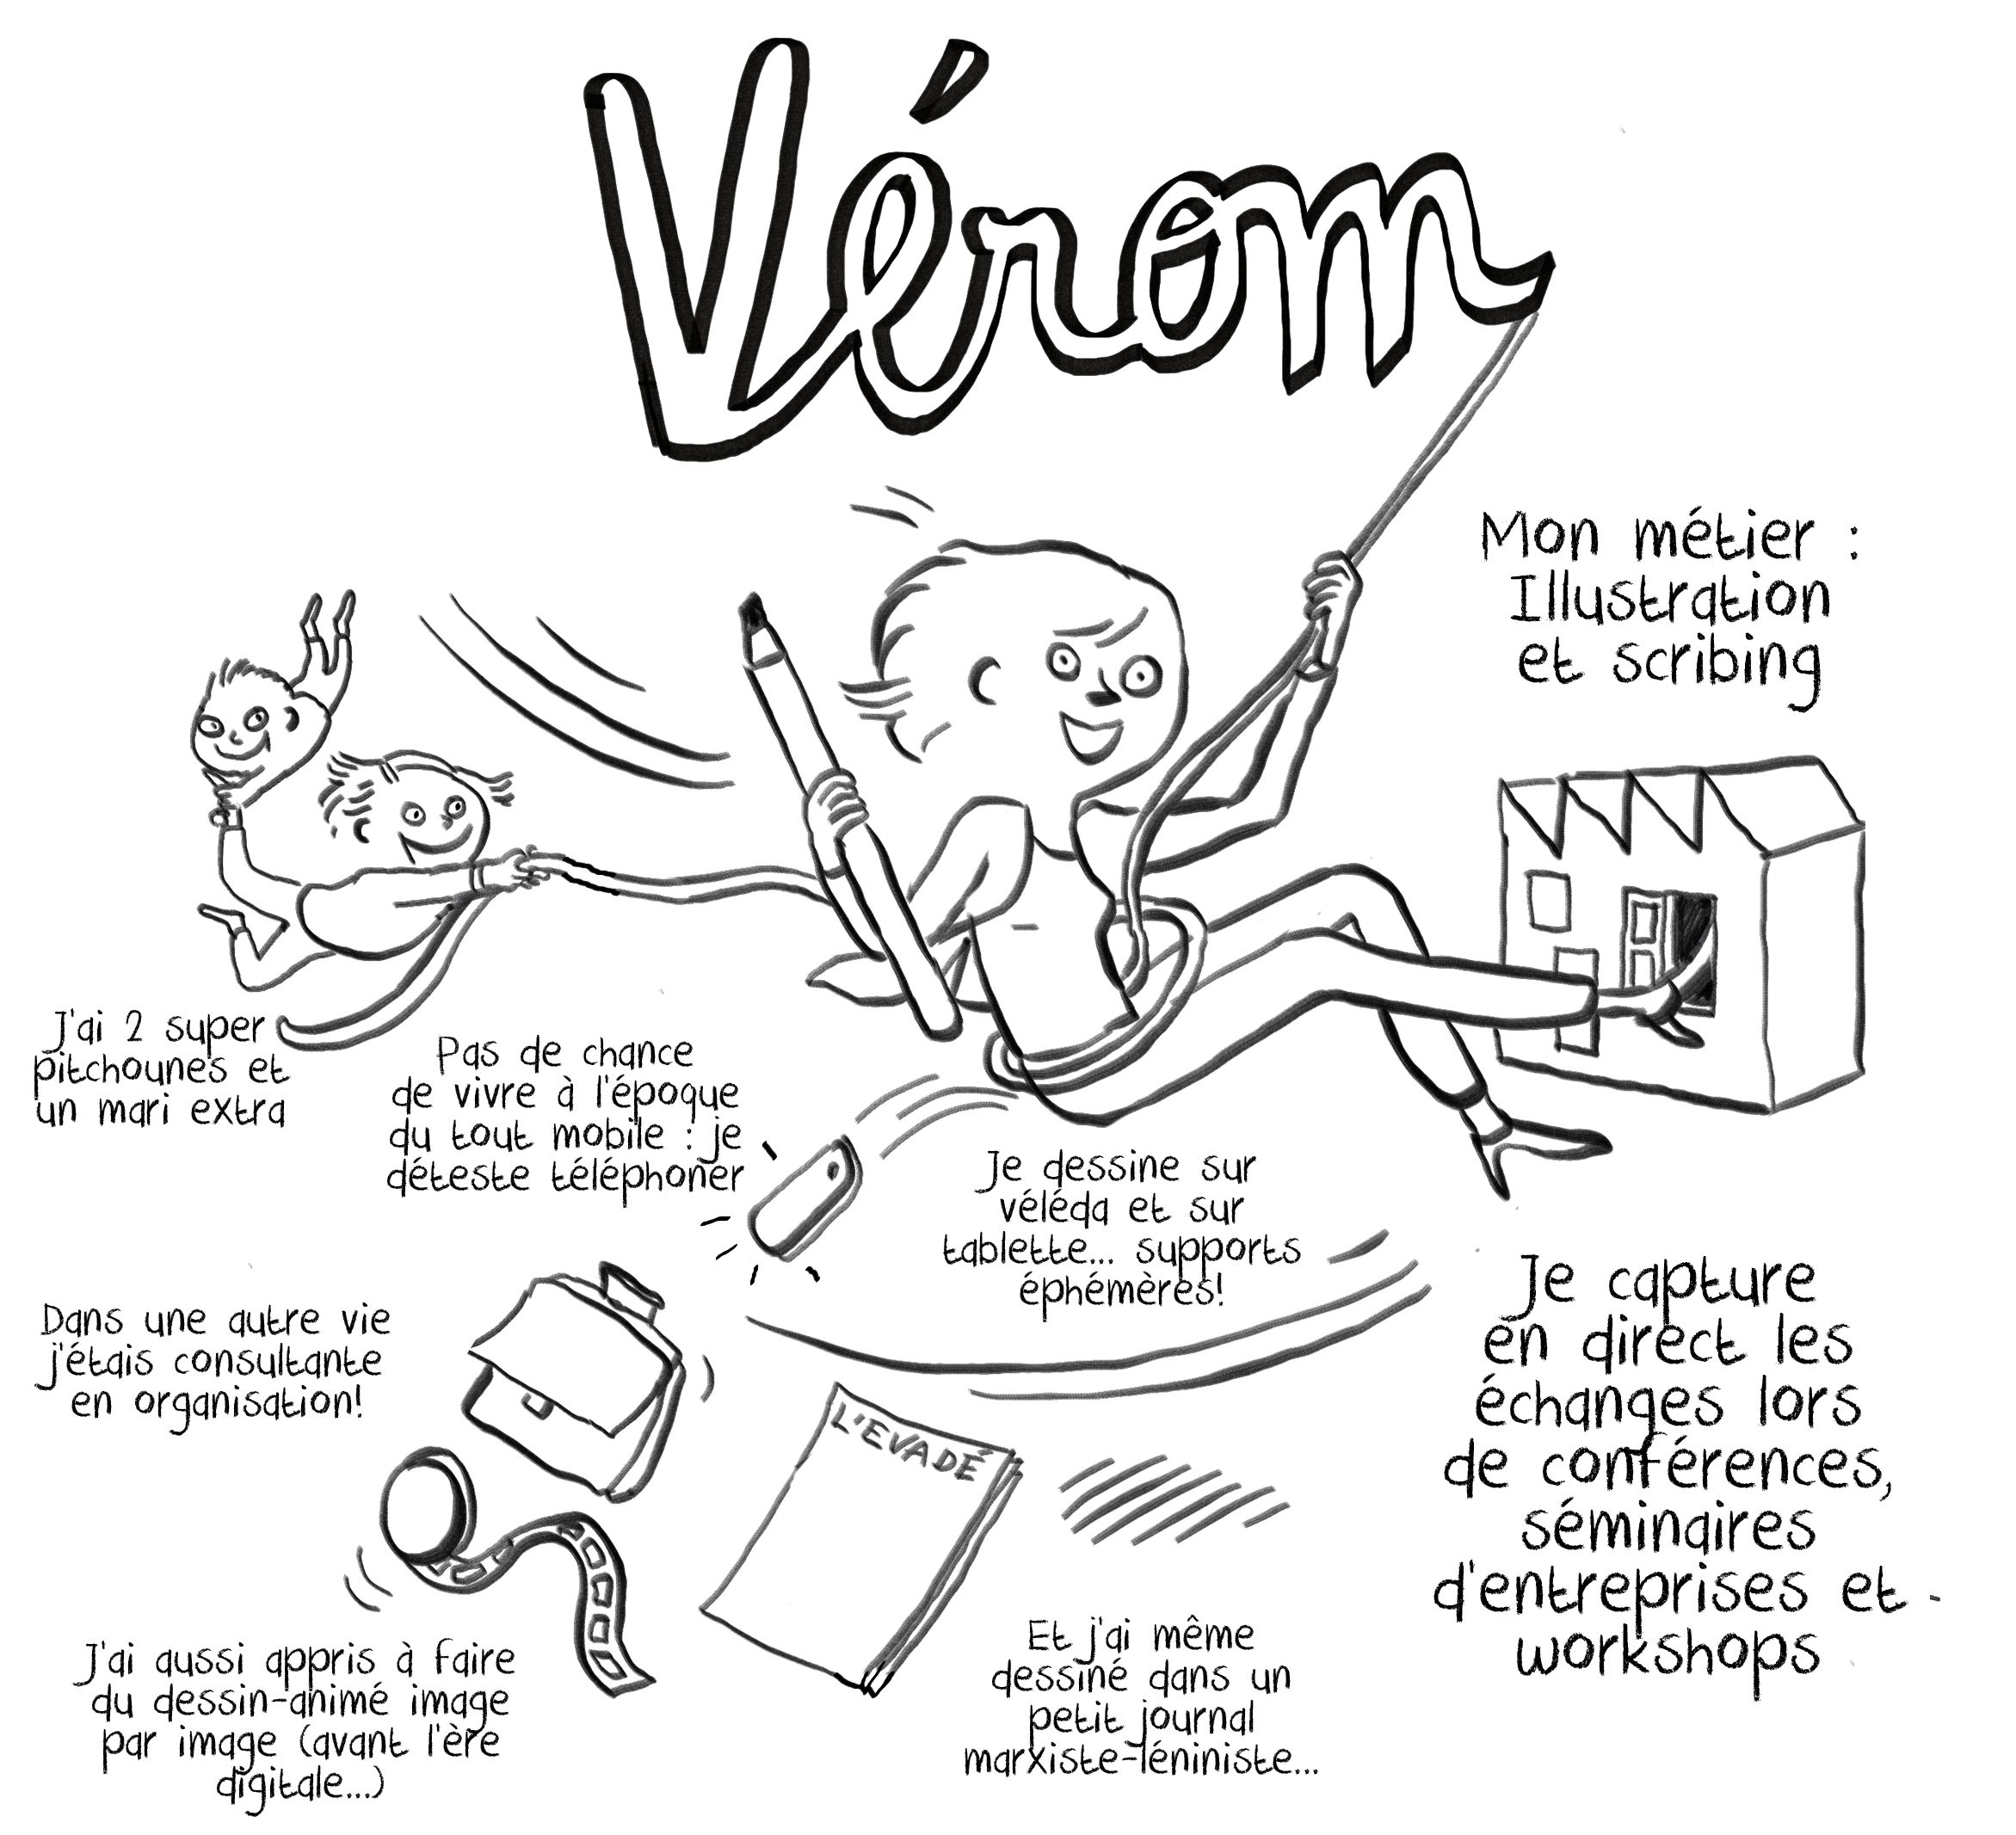 Verom - Illustration - facilitation graphique - creads